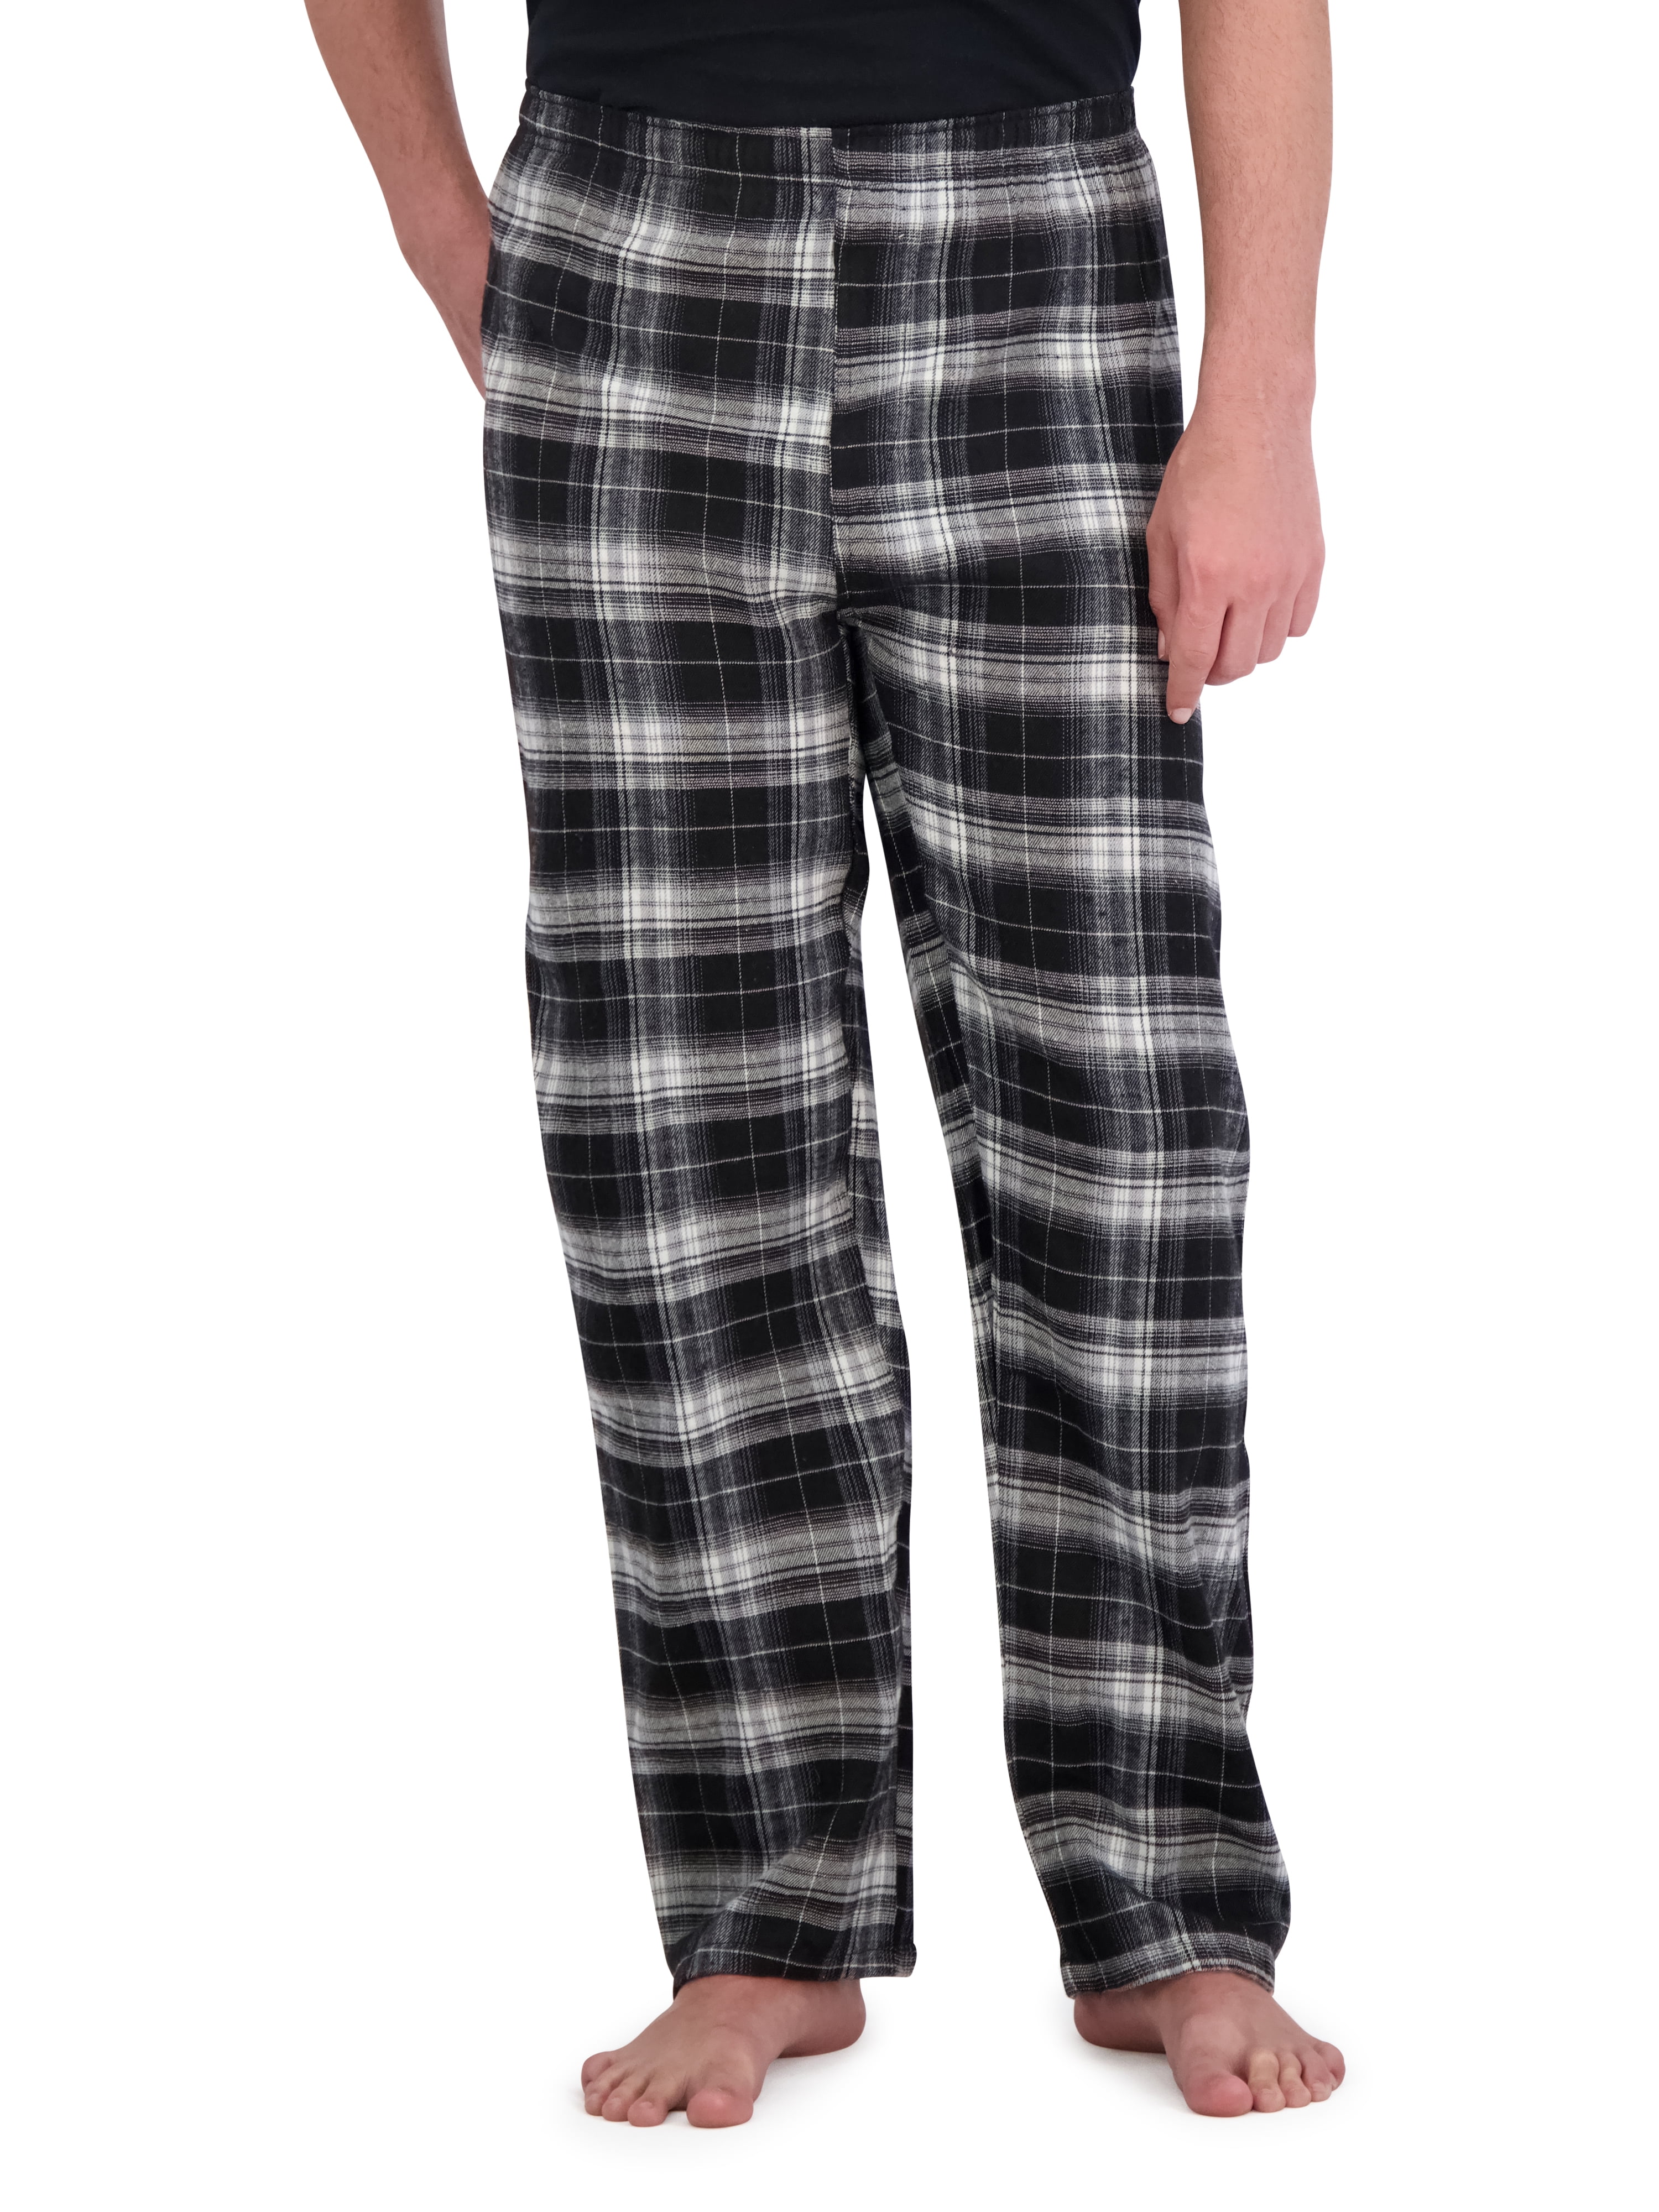 Jake & Co Cozy Soft Flannel Sleep Pant, Sizes S-XL - Walmart.com